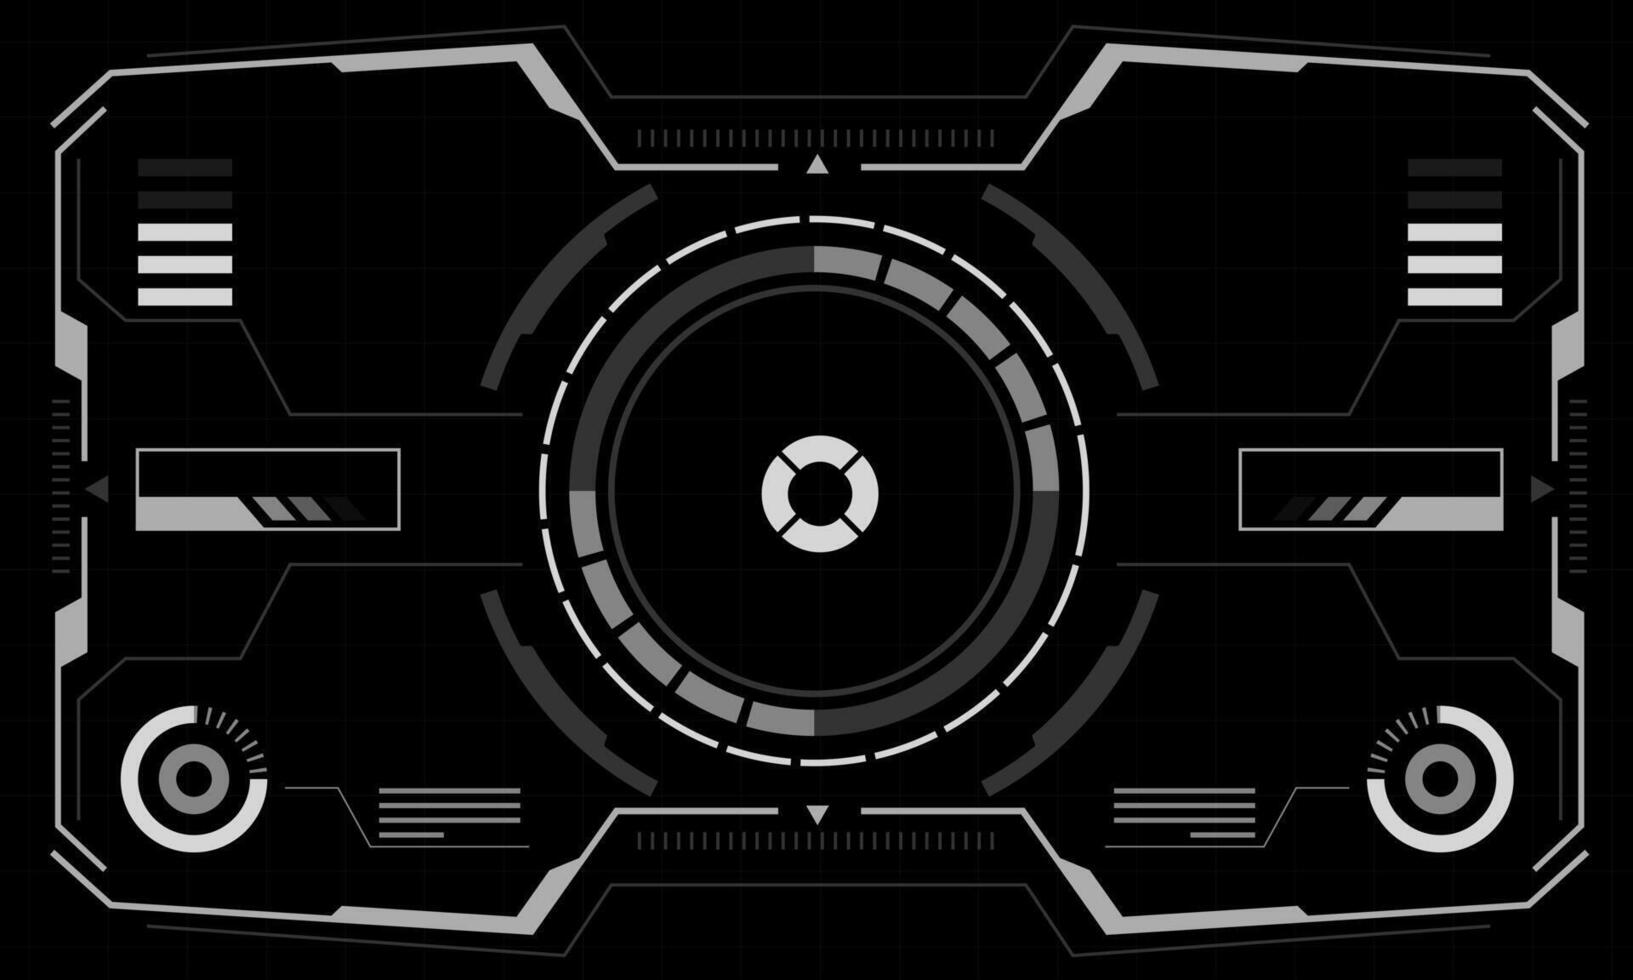 HUD sci-fi interface screen view white circular geometric design virtual reality futuristic technology creative display on black vector